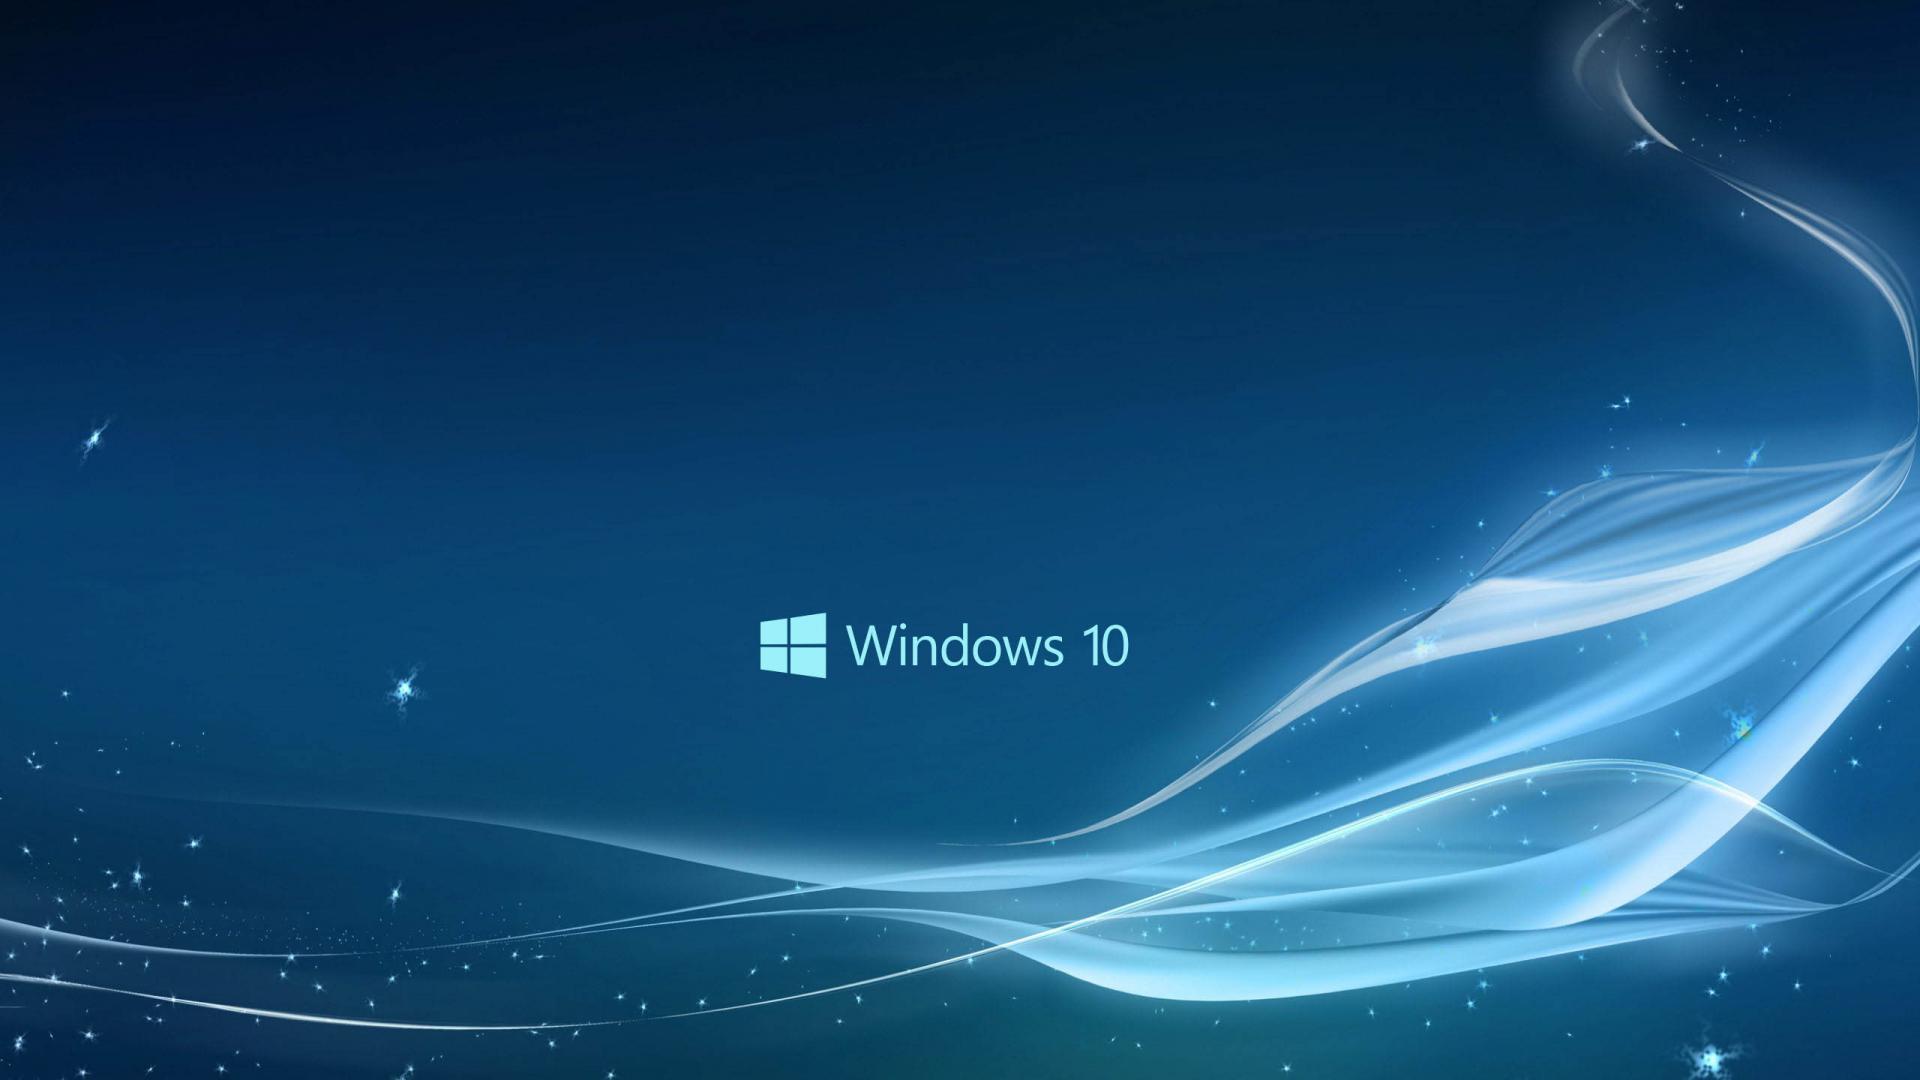 Free Windows 10 Hd Wallpaper Downloads 100 Windows 10 Hd Wallpapers for  FREE  Wallpaperscom